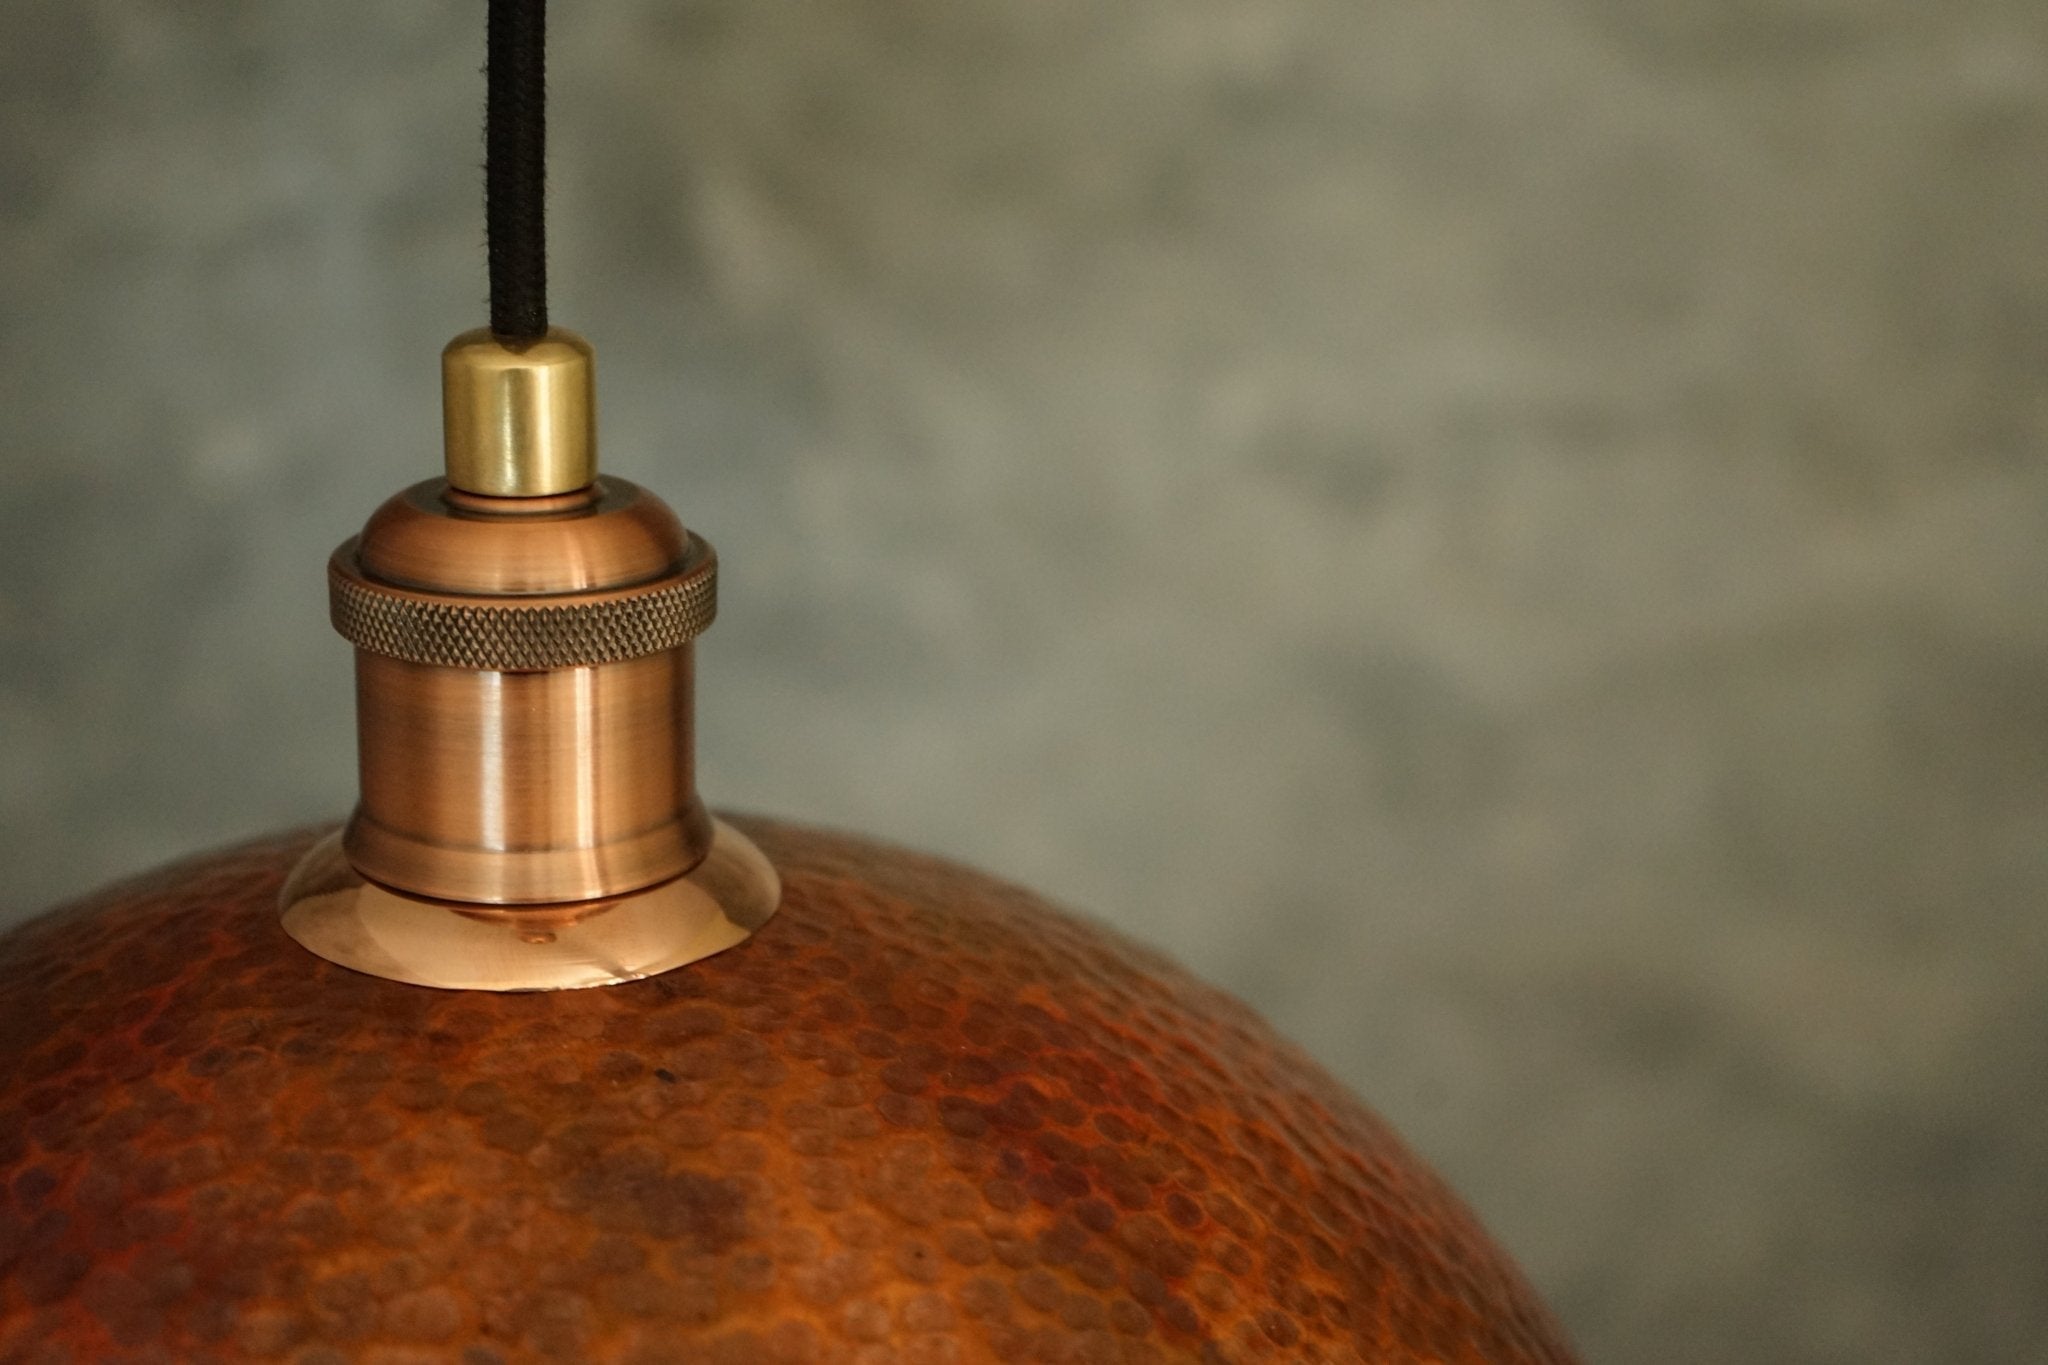 Oxidized Copper Pendant Light, Dome Ceiling Light, Hanging Kitchen Island Light Fixture